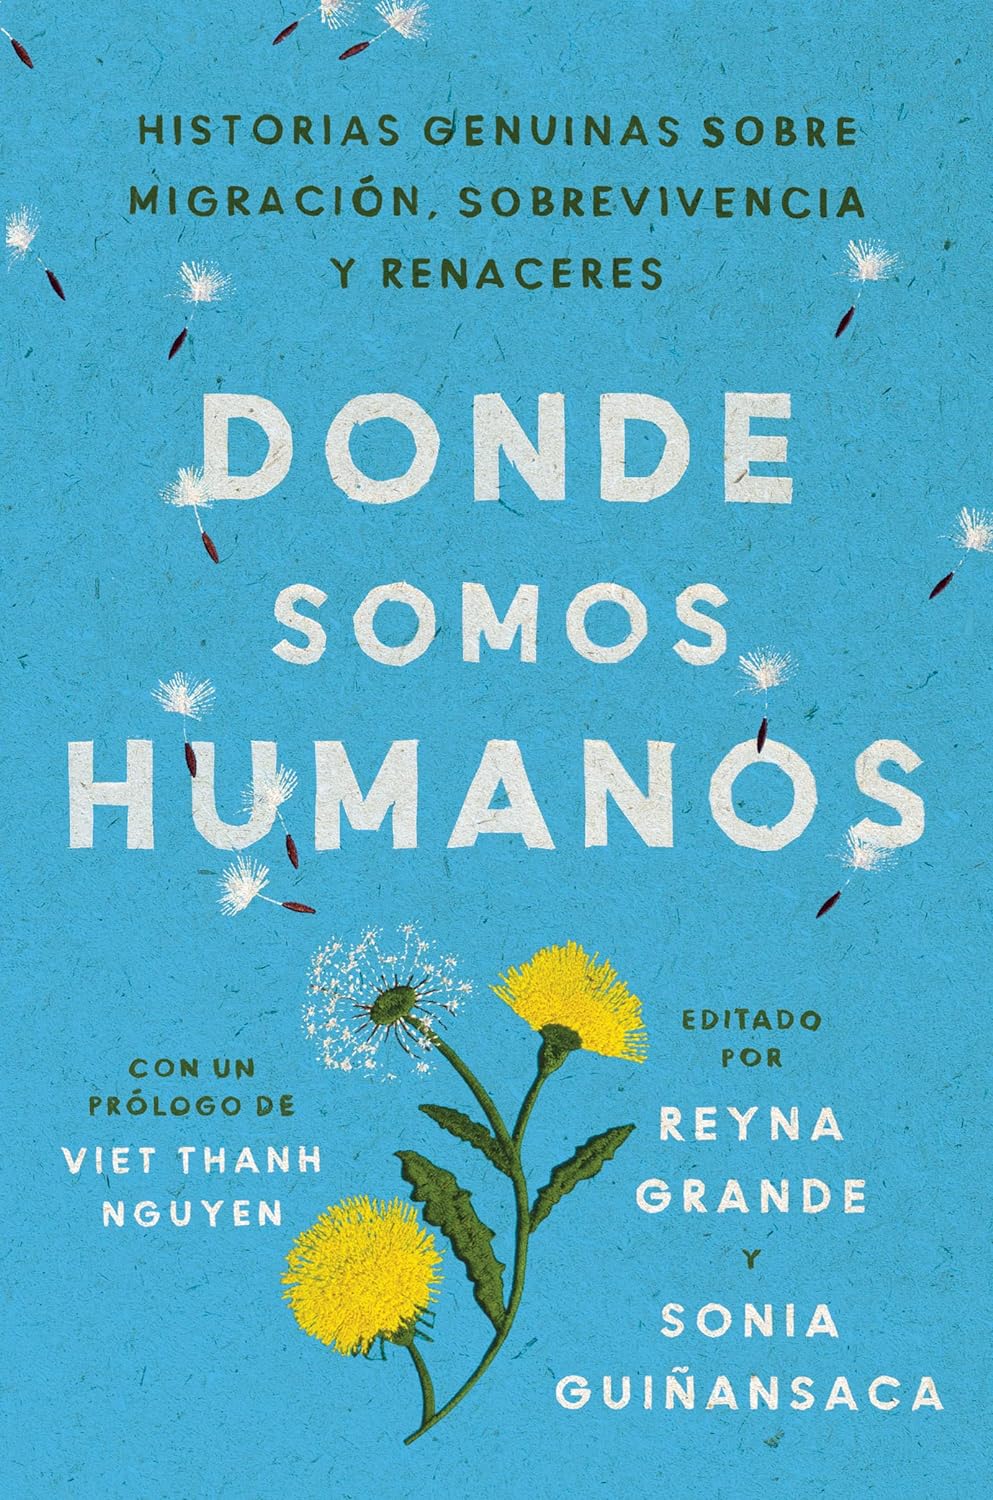 DONDE SOMOS HUMANOS - Reyna Grande & Sonia Guiñansaca  (editoras)